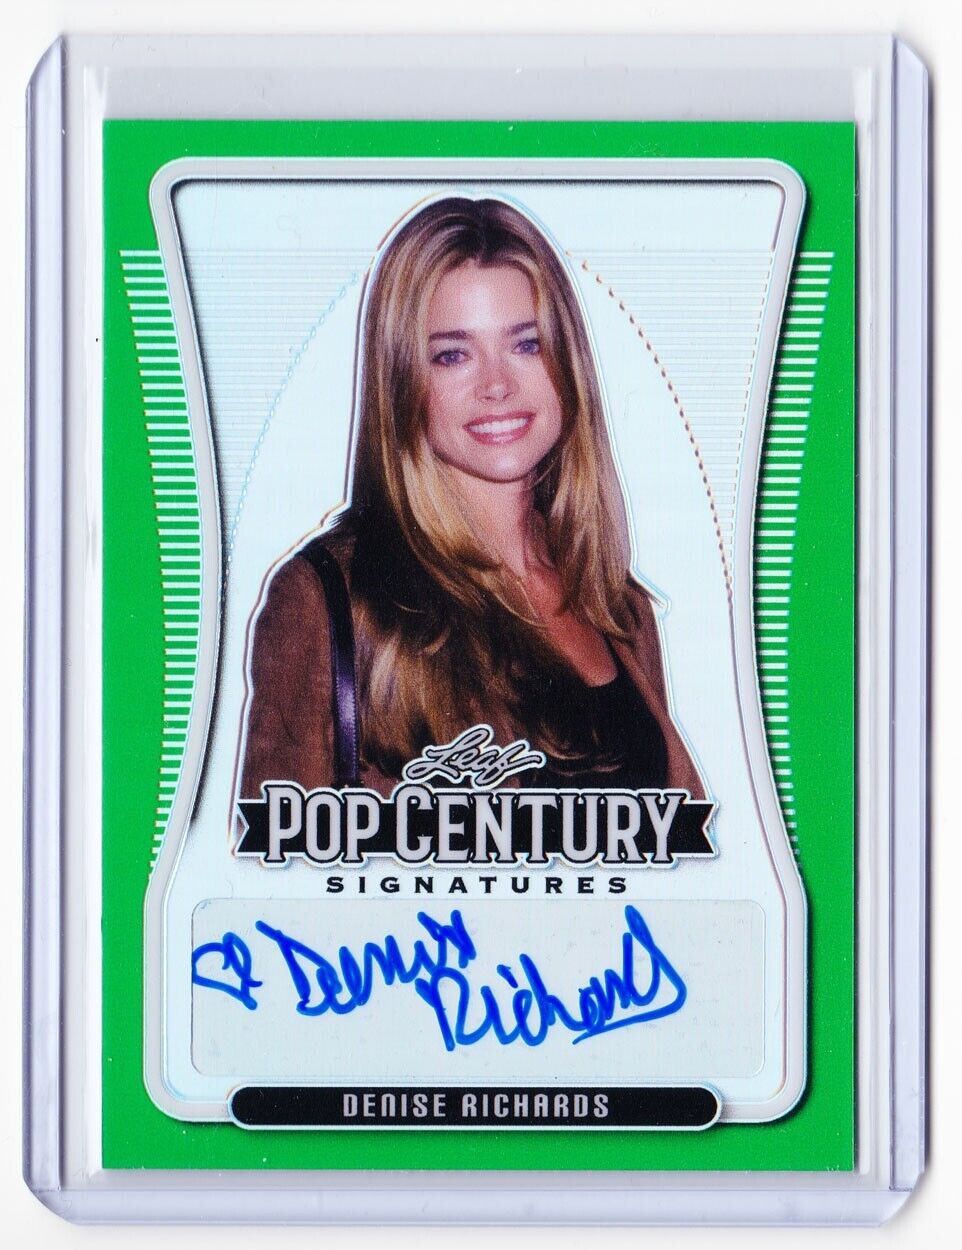 Denise Richards 2020 Pop Century Autograph Card /7  Rare FULL Signature Auto